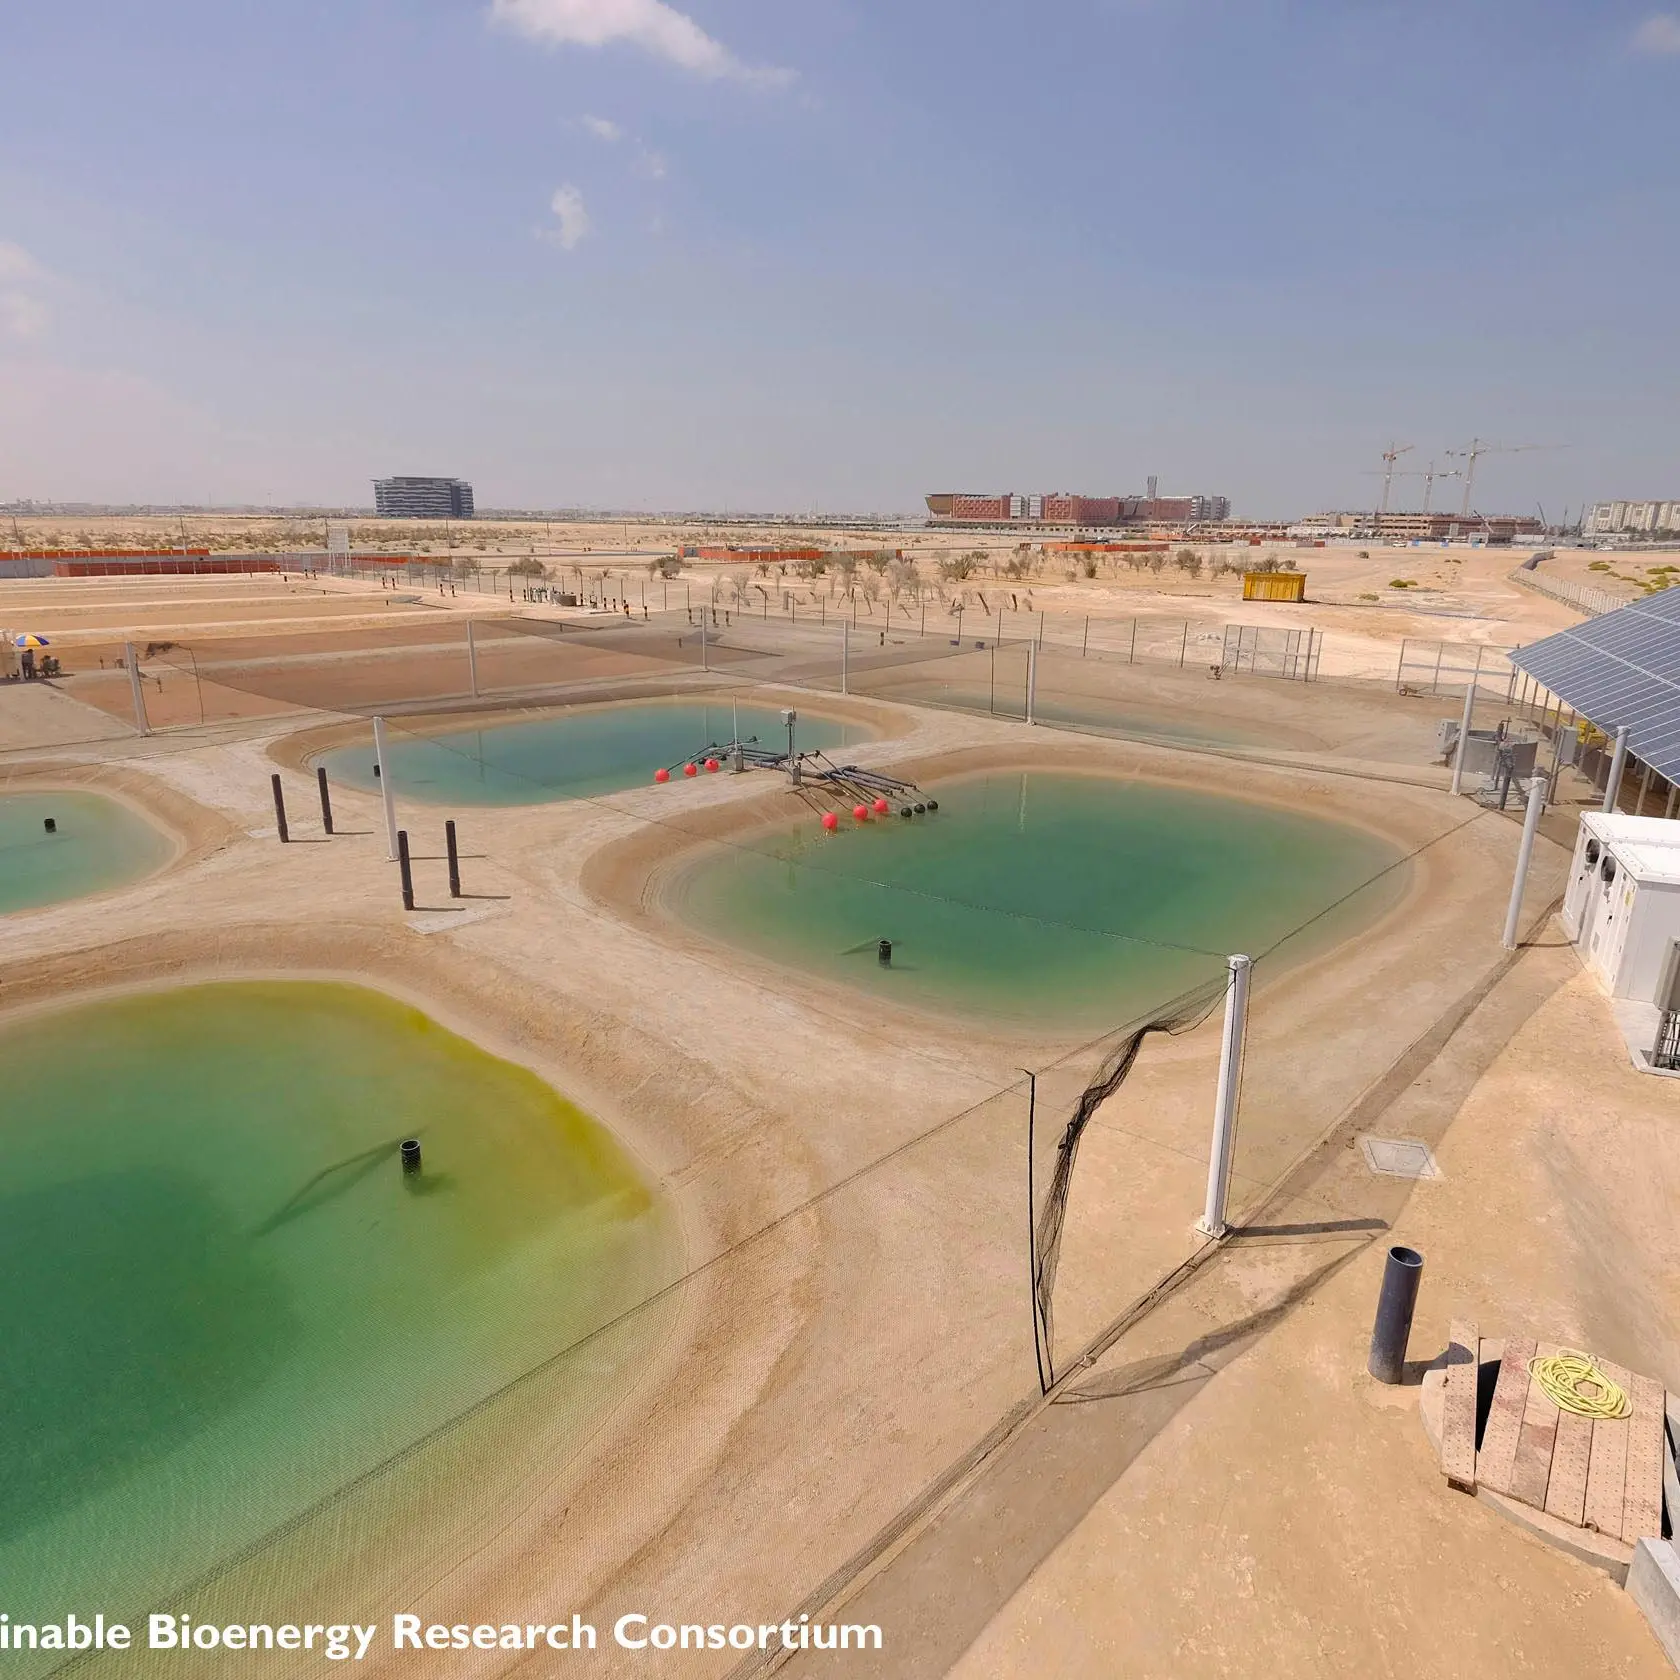 INTERVIEW-Masdar's biojet fuel project takes flight